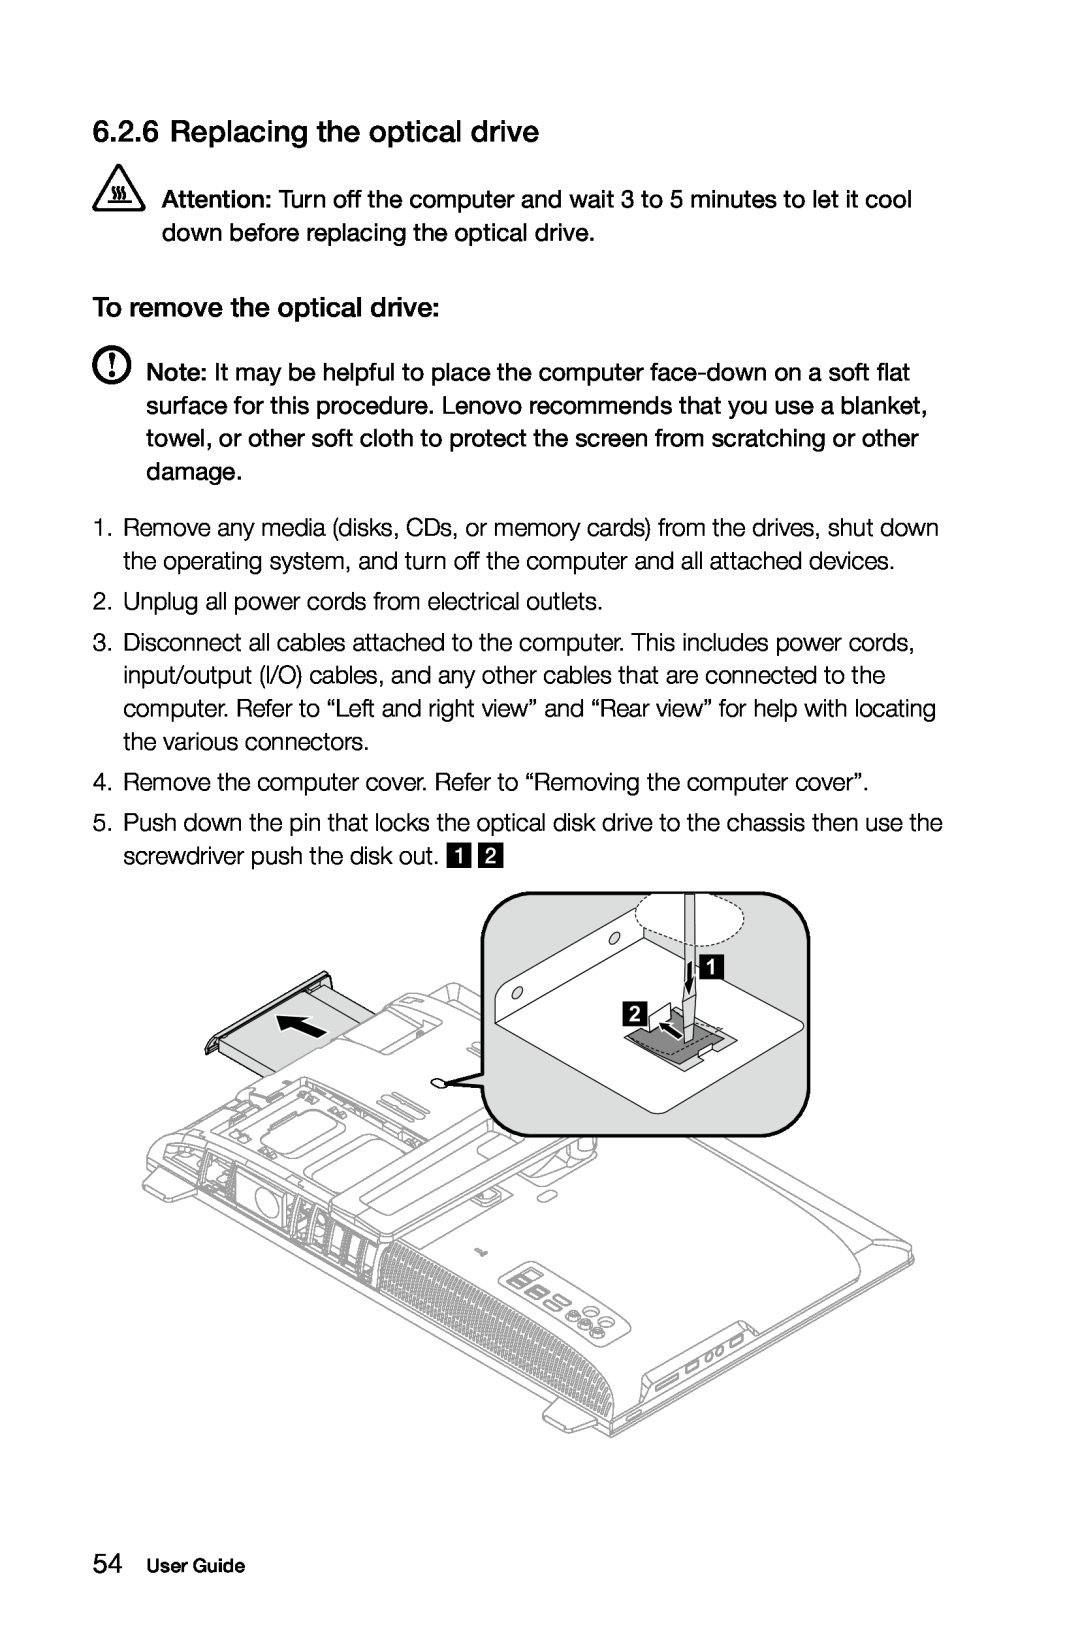 Lenovo 2568 [B540] 10101, 97, 4749 [B545], 3363 [B540p] 10098 manual Replacing the optical drive, To remove the optical drive 